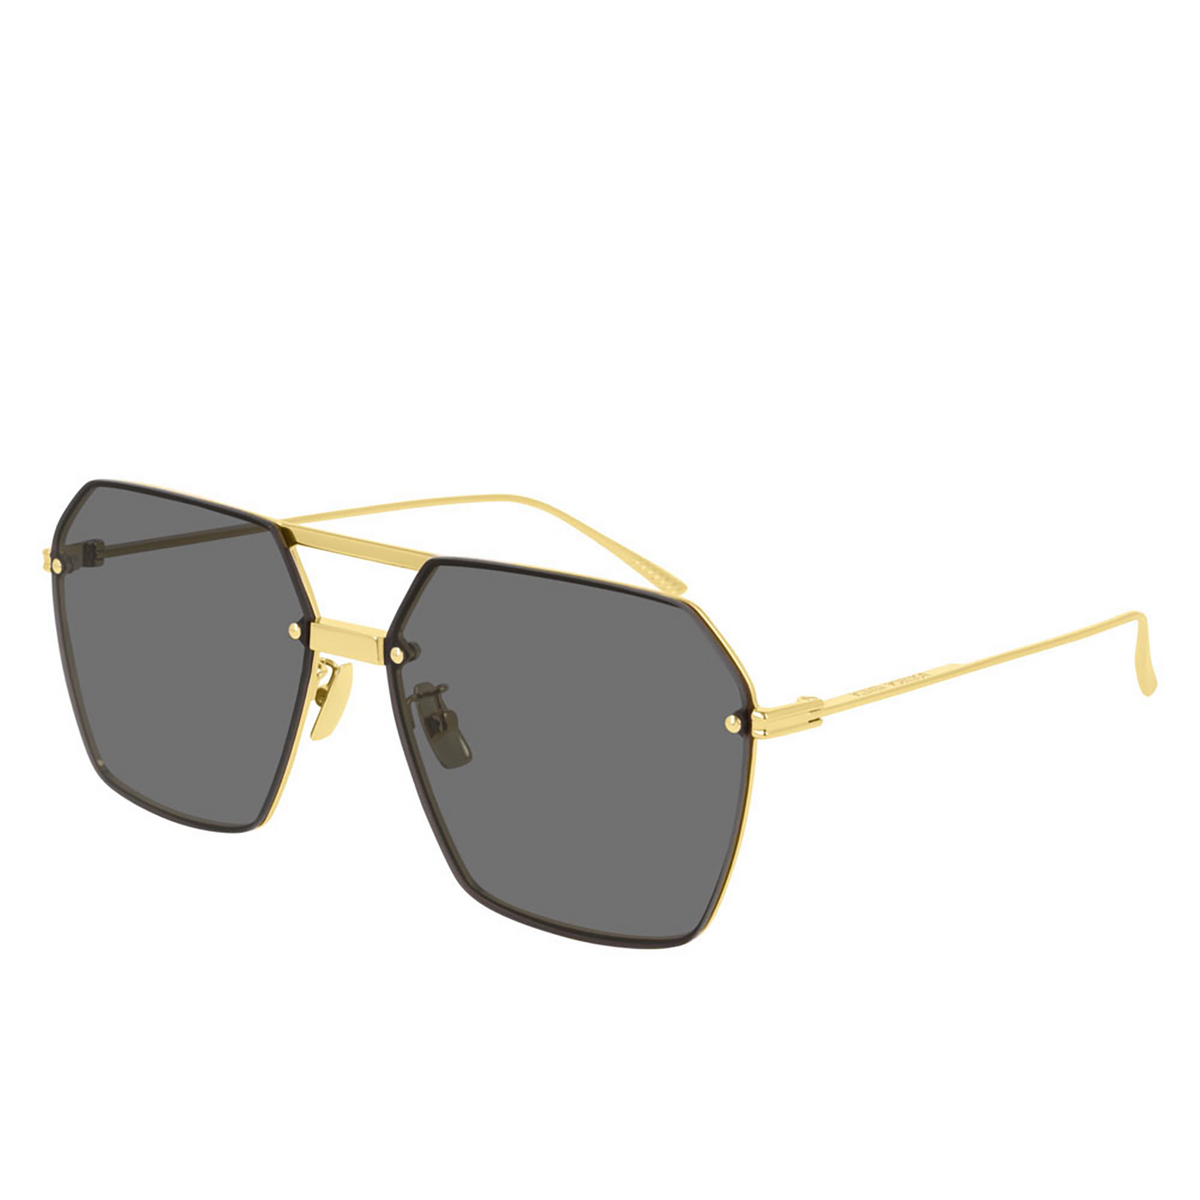 Bottega Veneta® Irregular Sunglasses: BV1045S color Gold 001 - three-quarters view.